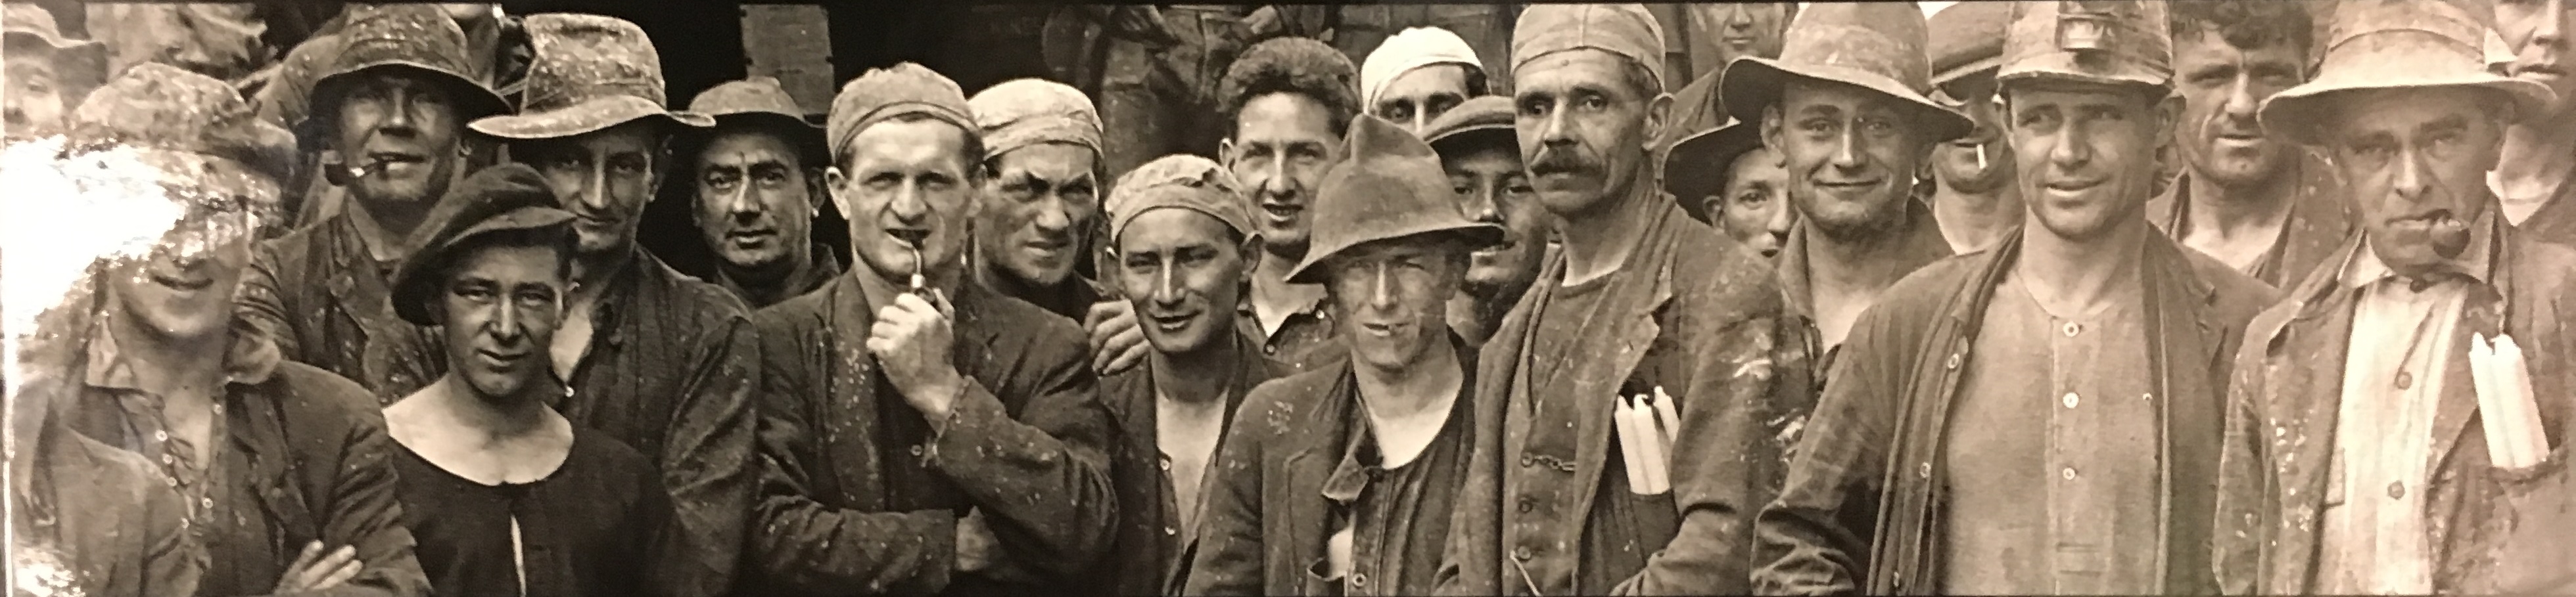 miners